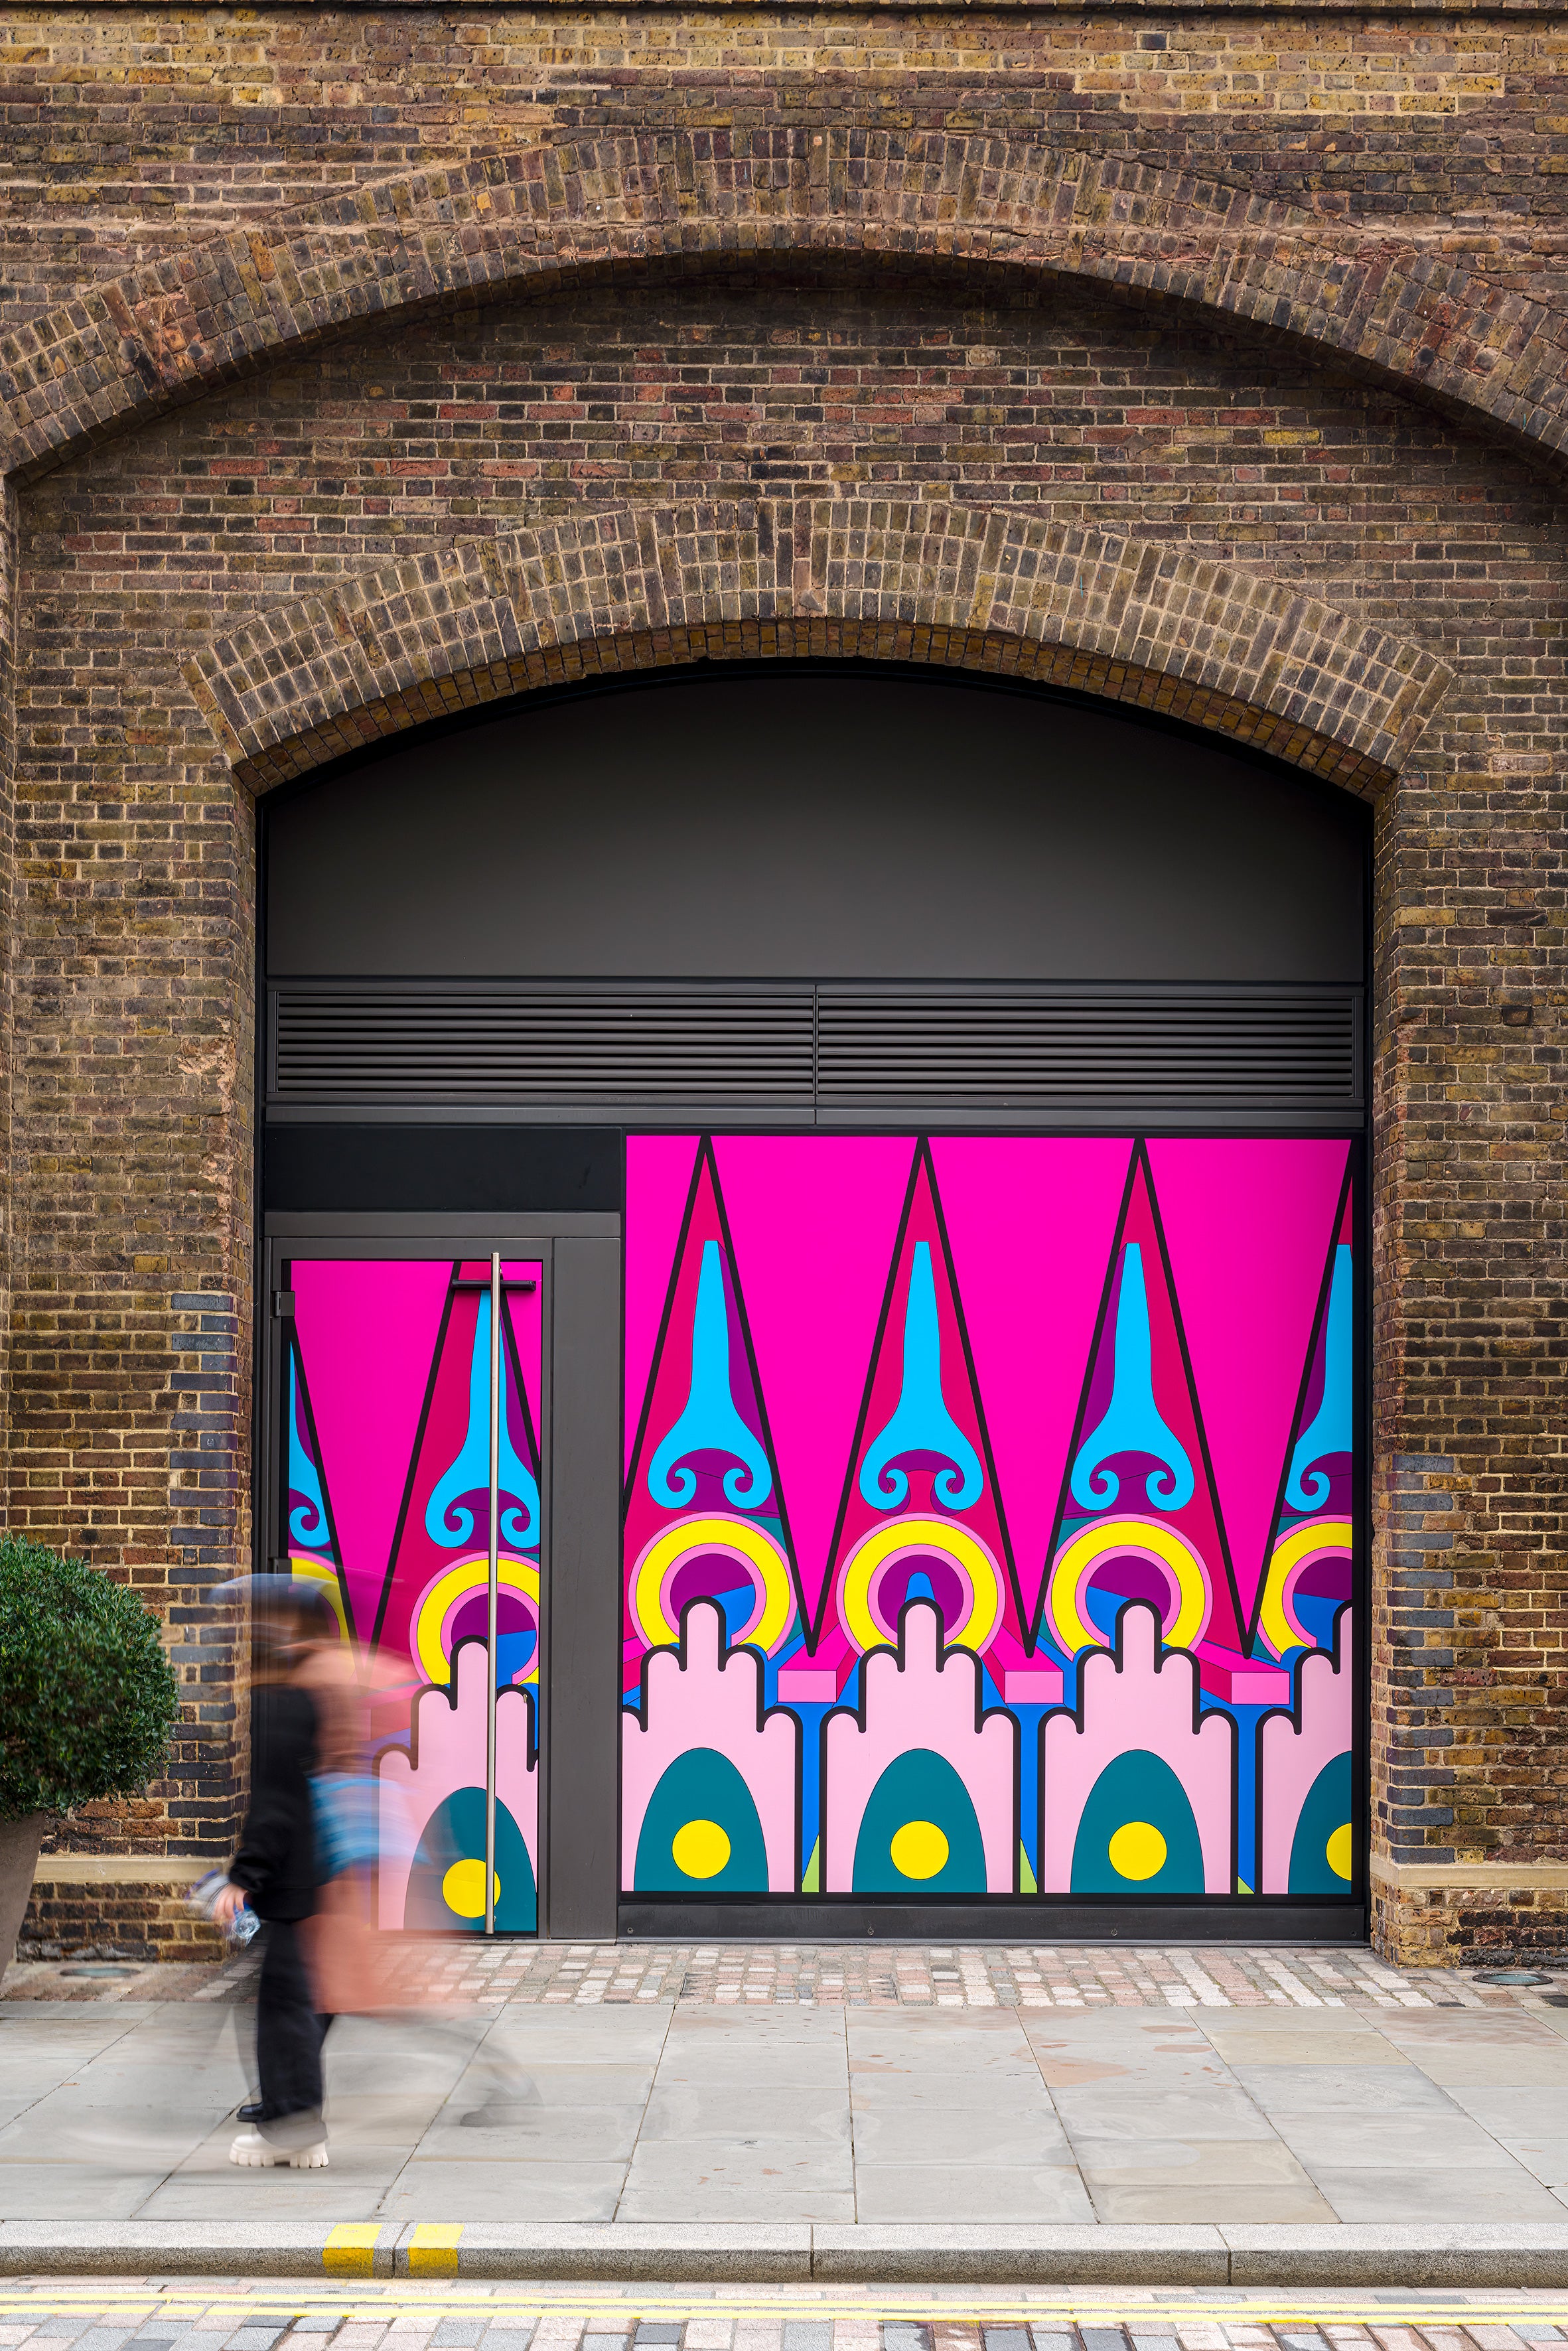 Memo Walls, public artwork in Kings Cross for Argent by Adam Nathaniel Furman